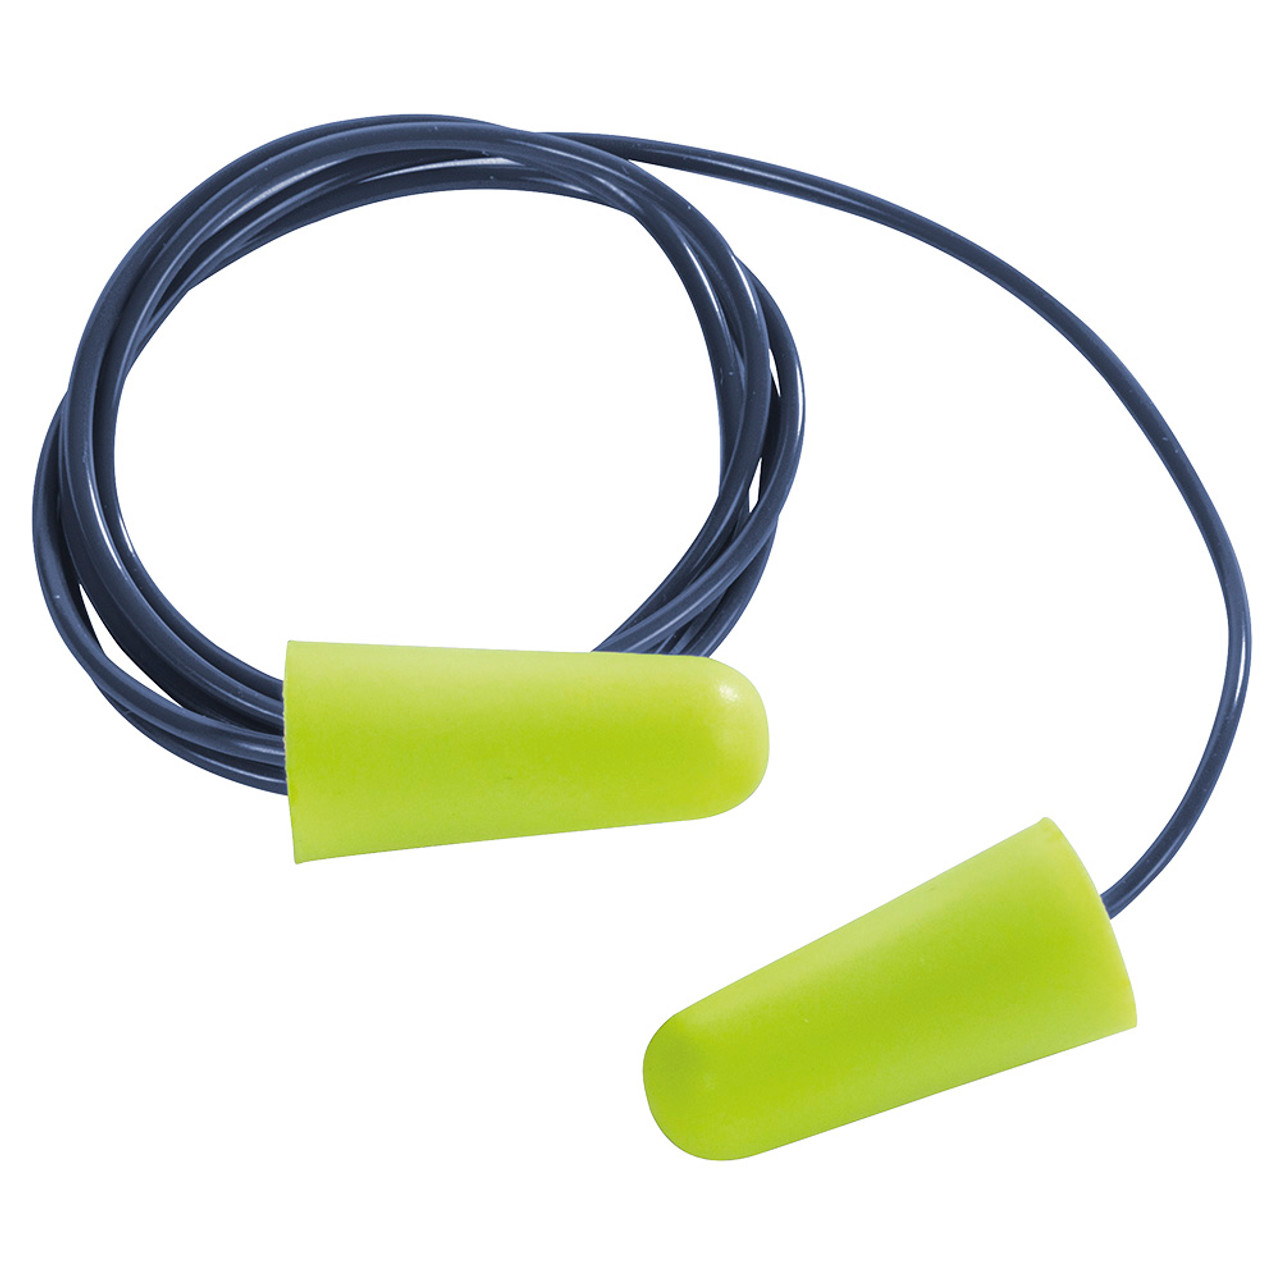 Sellstrom® Disposable Corded Yellow Bullet Shape Foam Ear Plugs - 100 Pack  S23412